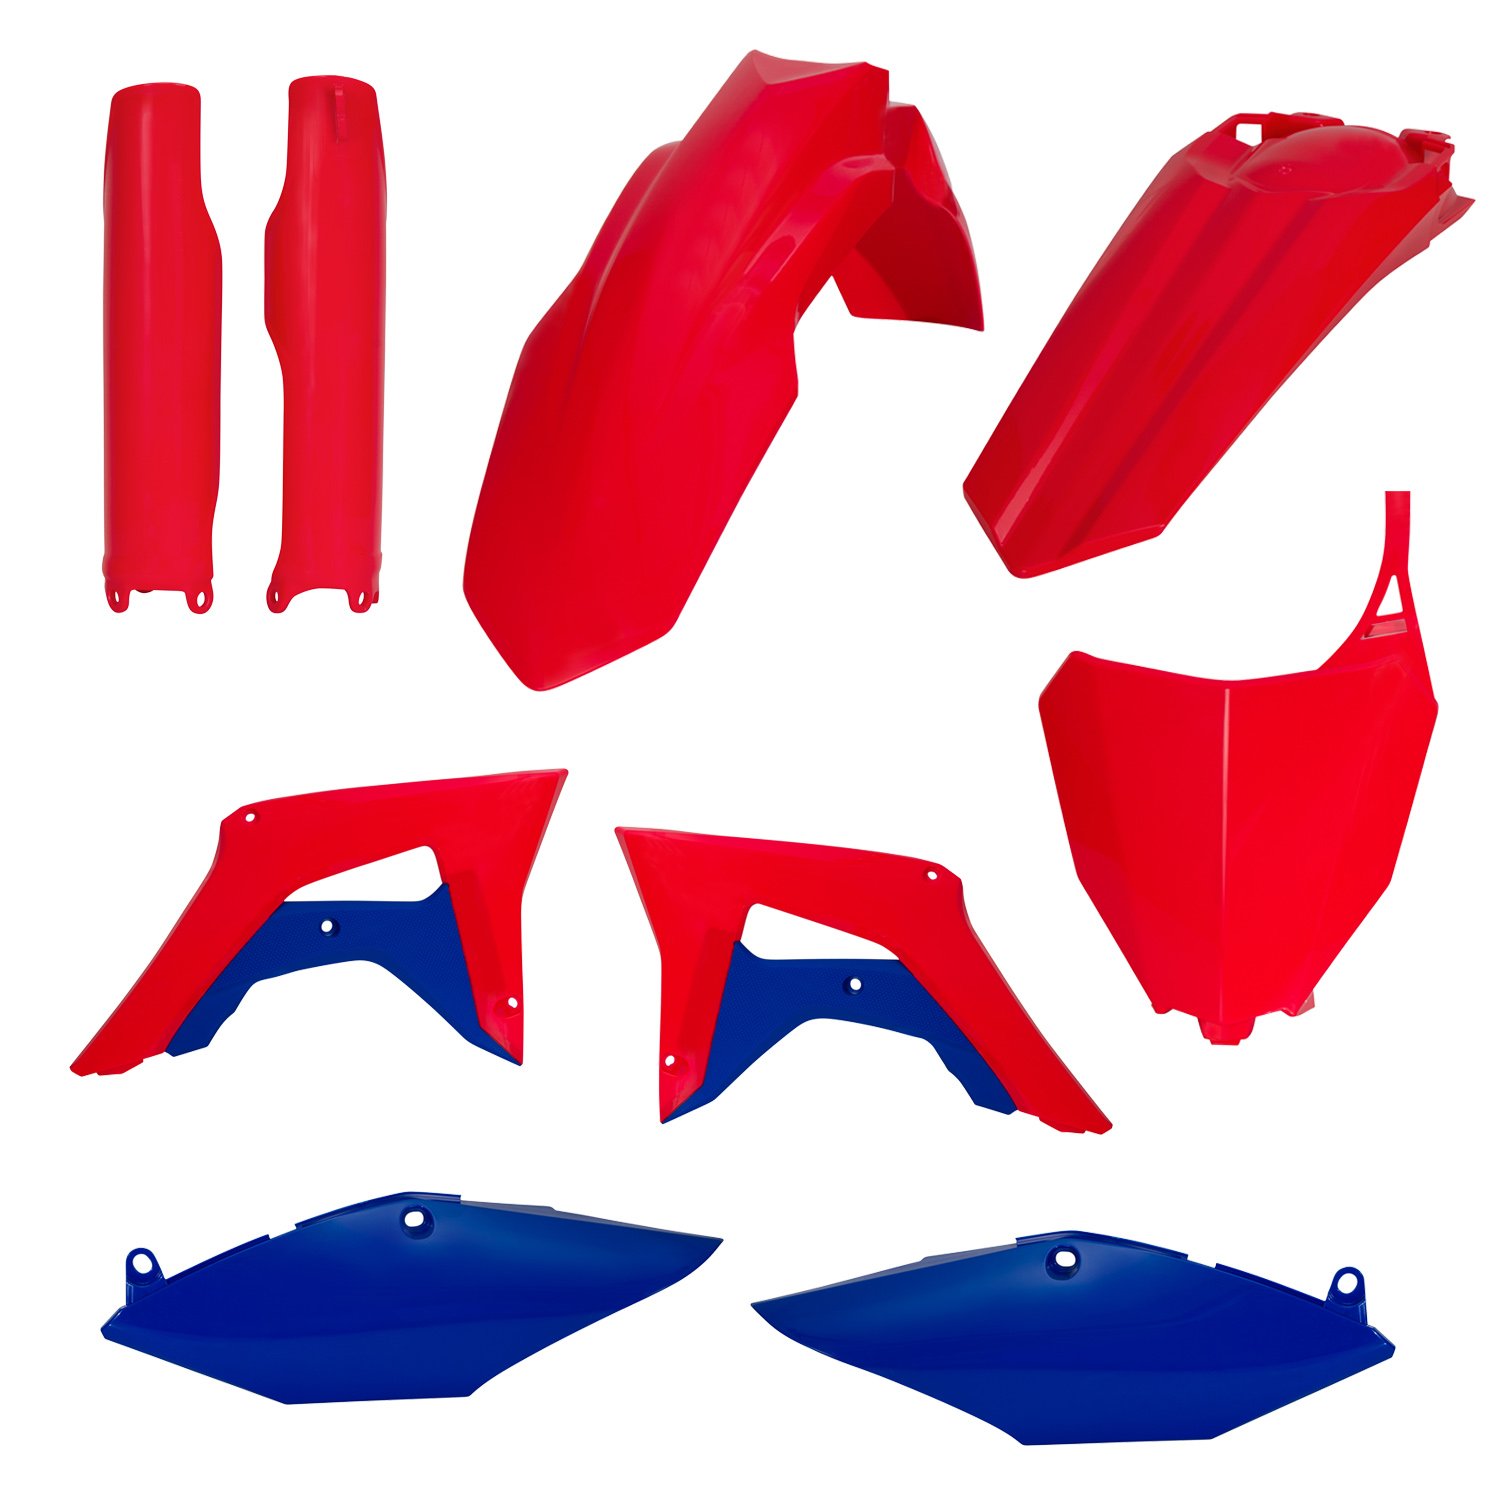 Acerbis Plastik-Kit Full-Kit Honda CRF 250R 18-21, CRF 450R 17-20, Rot/Blau, limitierte Auflage